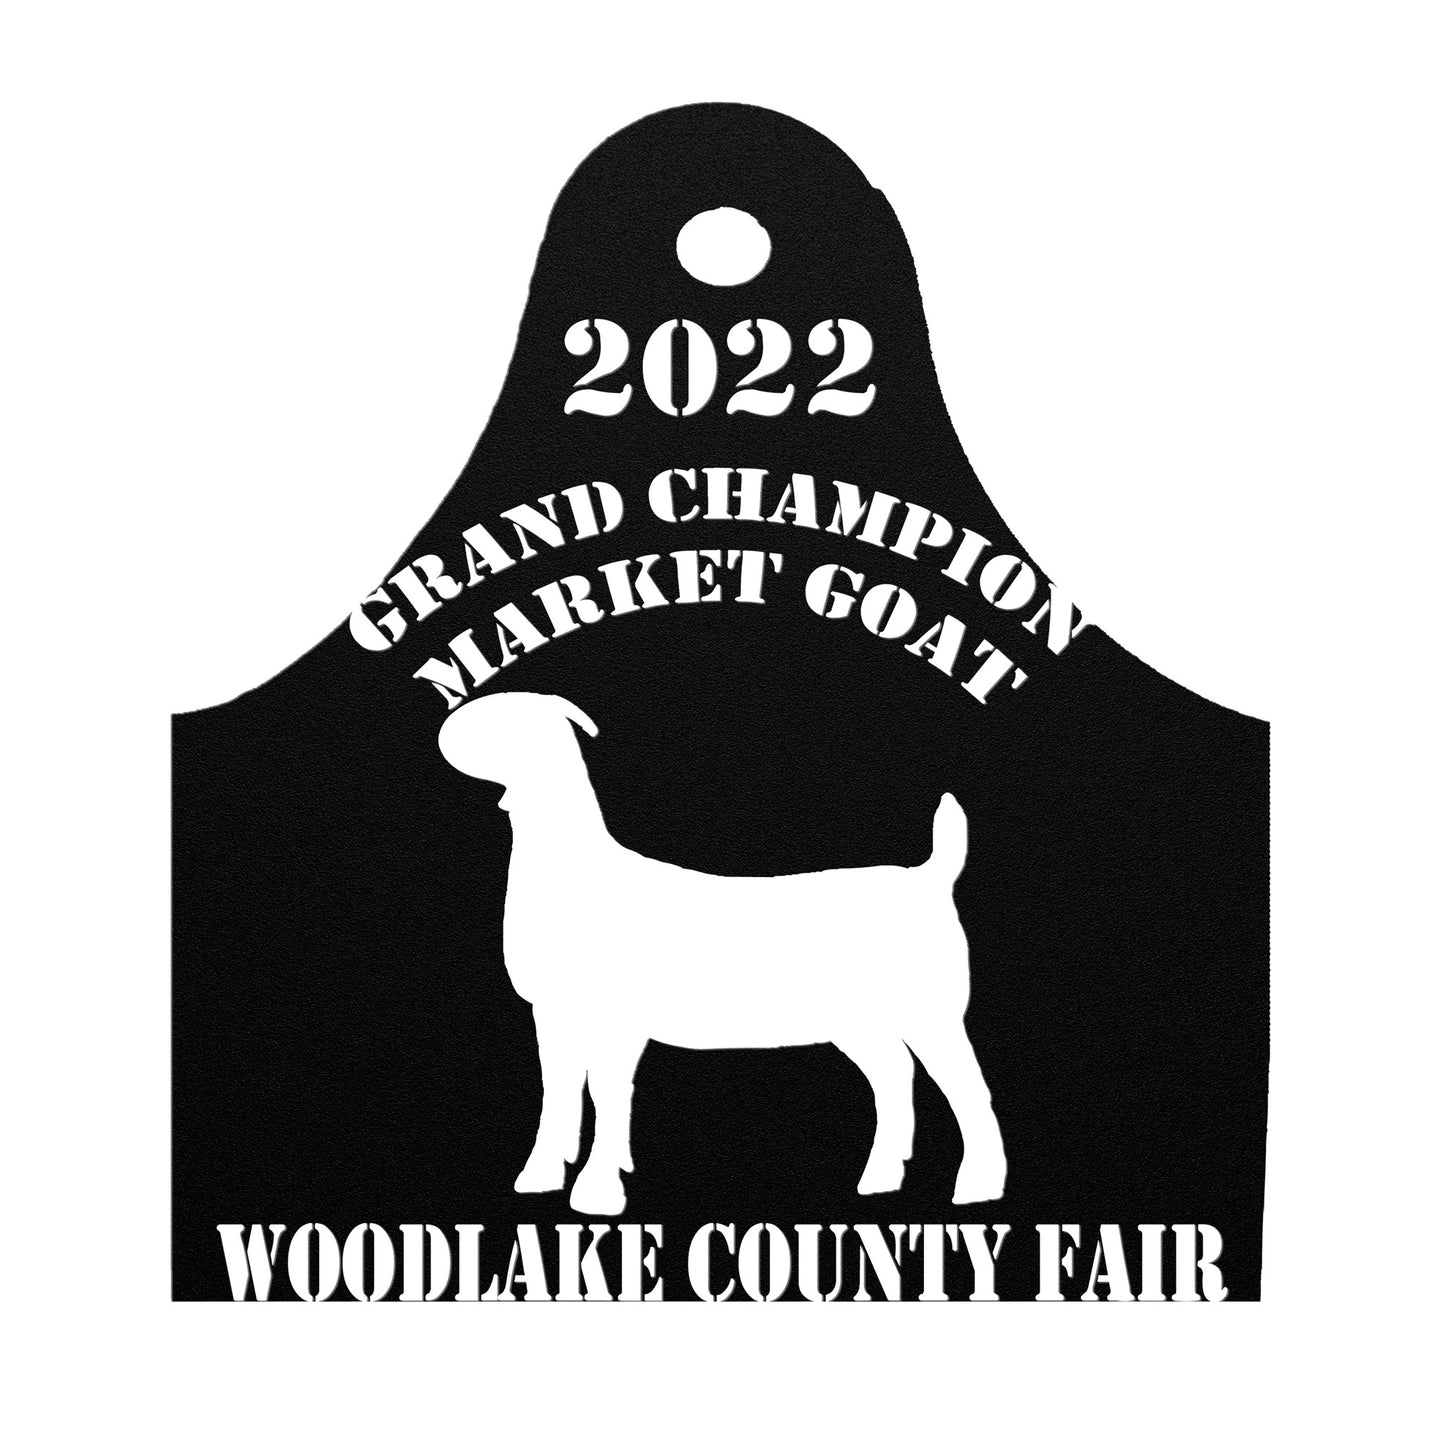 Custom Livestock Show Goat Metal Art Personalized Plasma Cut Sign or Award | Market Goat | Plaque | Stockshow